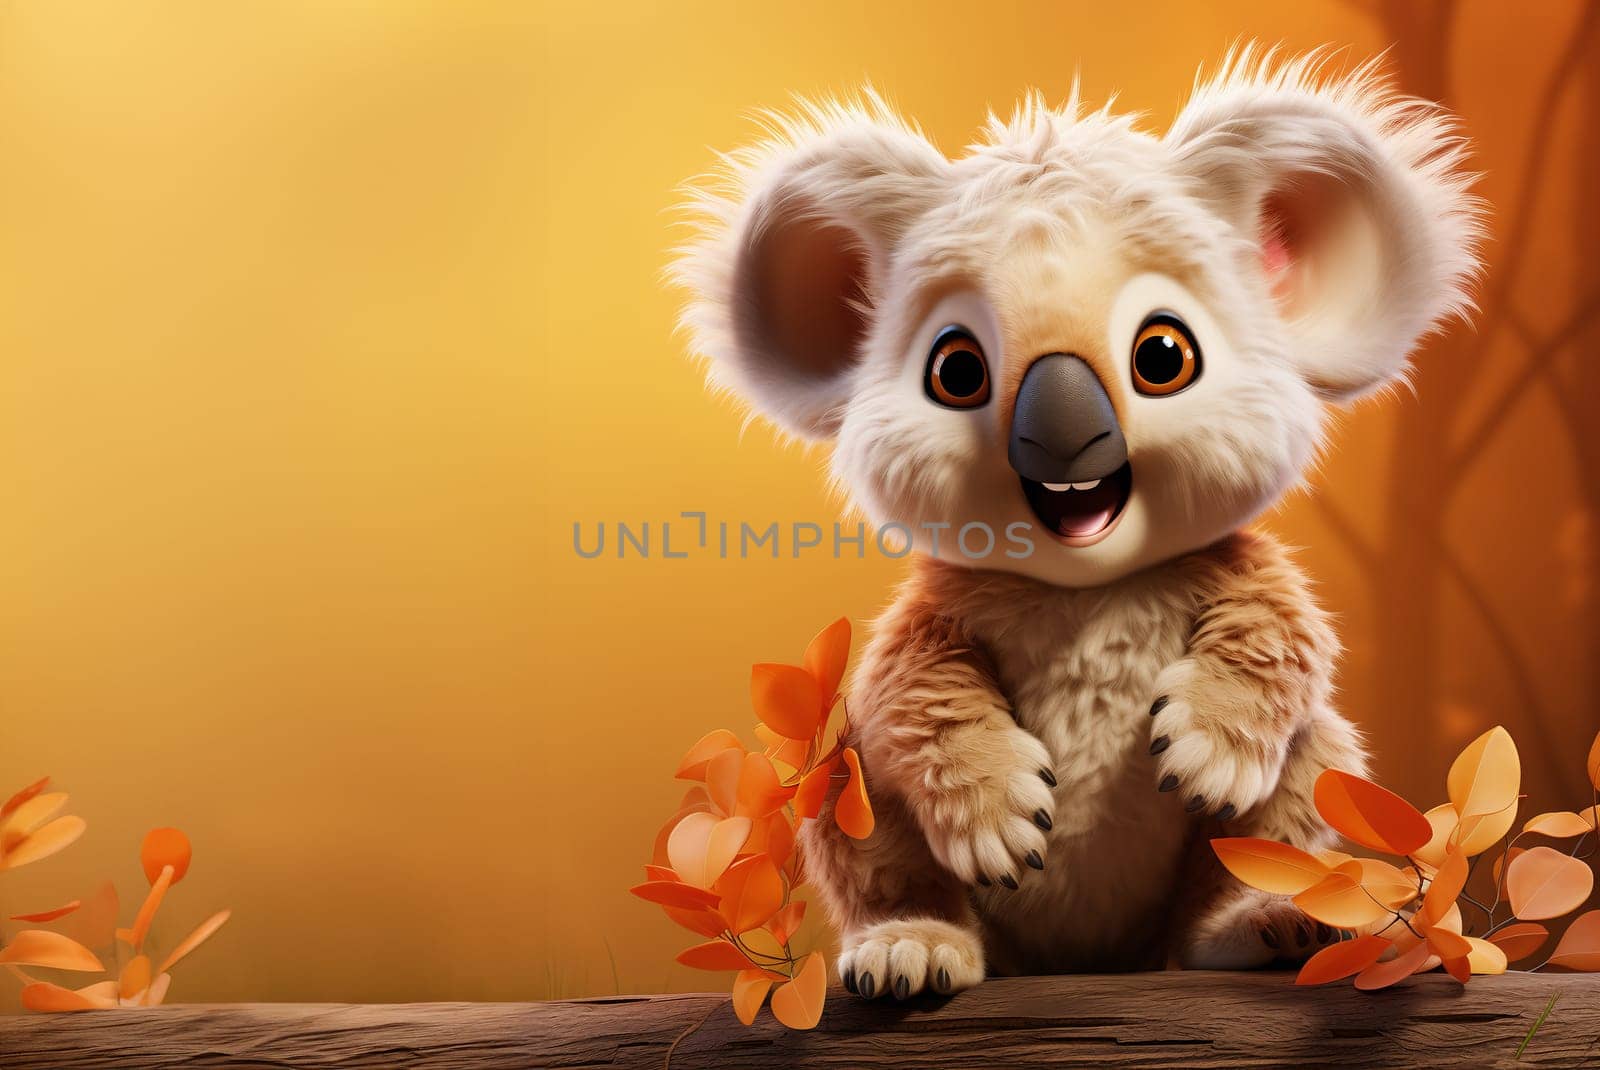 Cheerful Koala Character Smiling Among Autumn Leaves by chrisroll